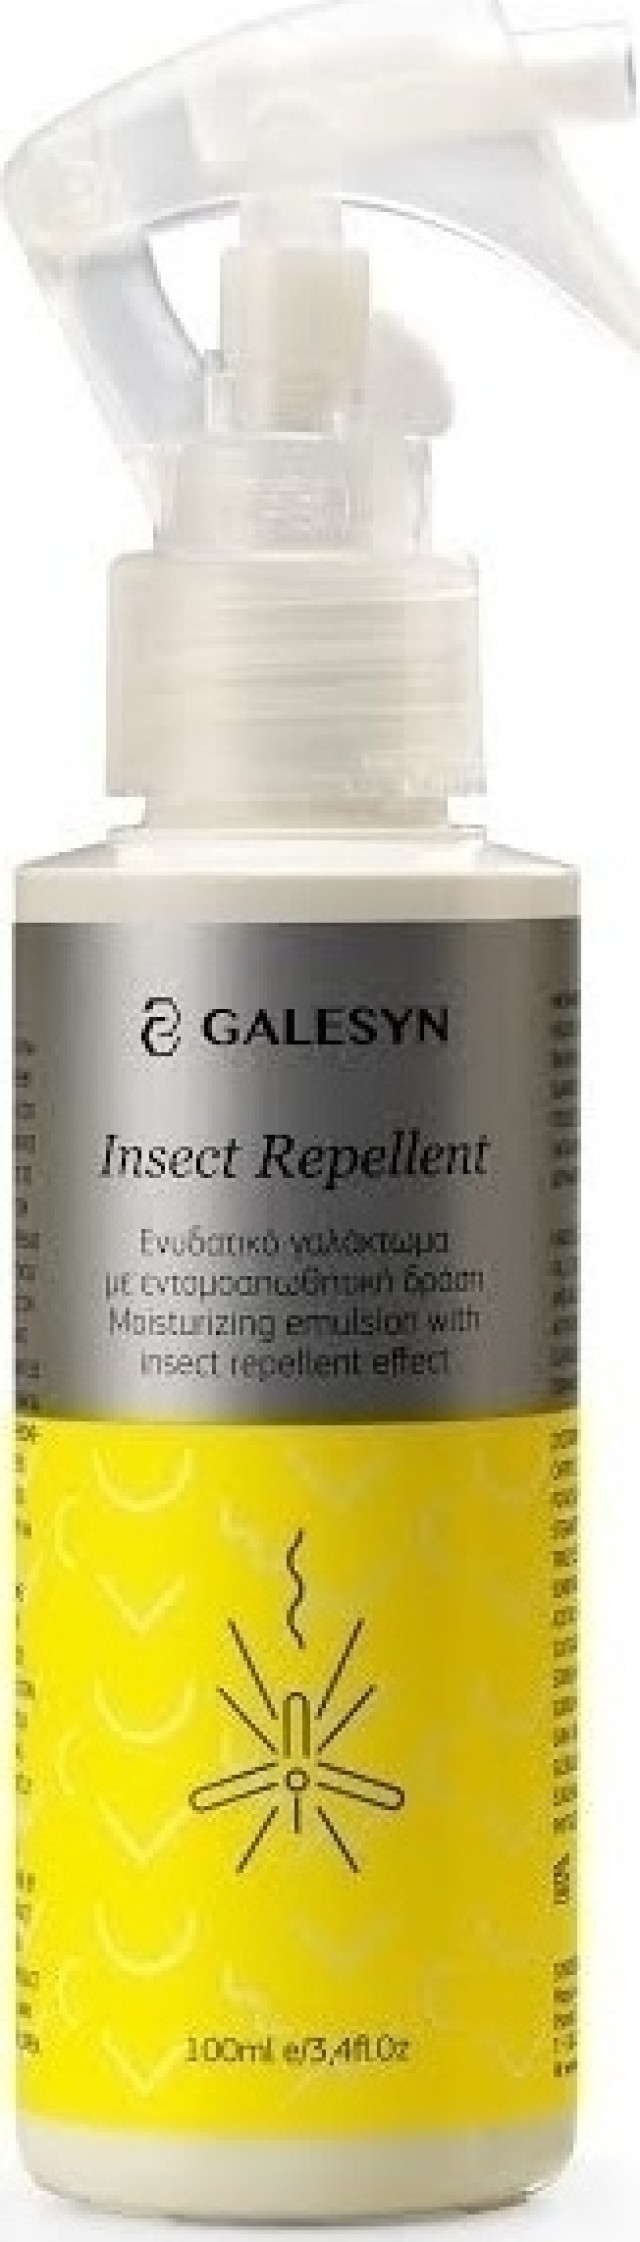 Galesyn Insect Repellent Γαλάκτωμα με Eντομοαπωθητική Δράση 100ml